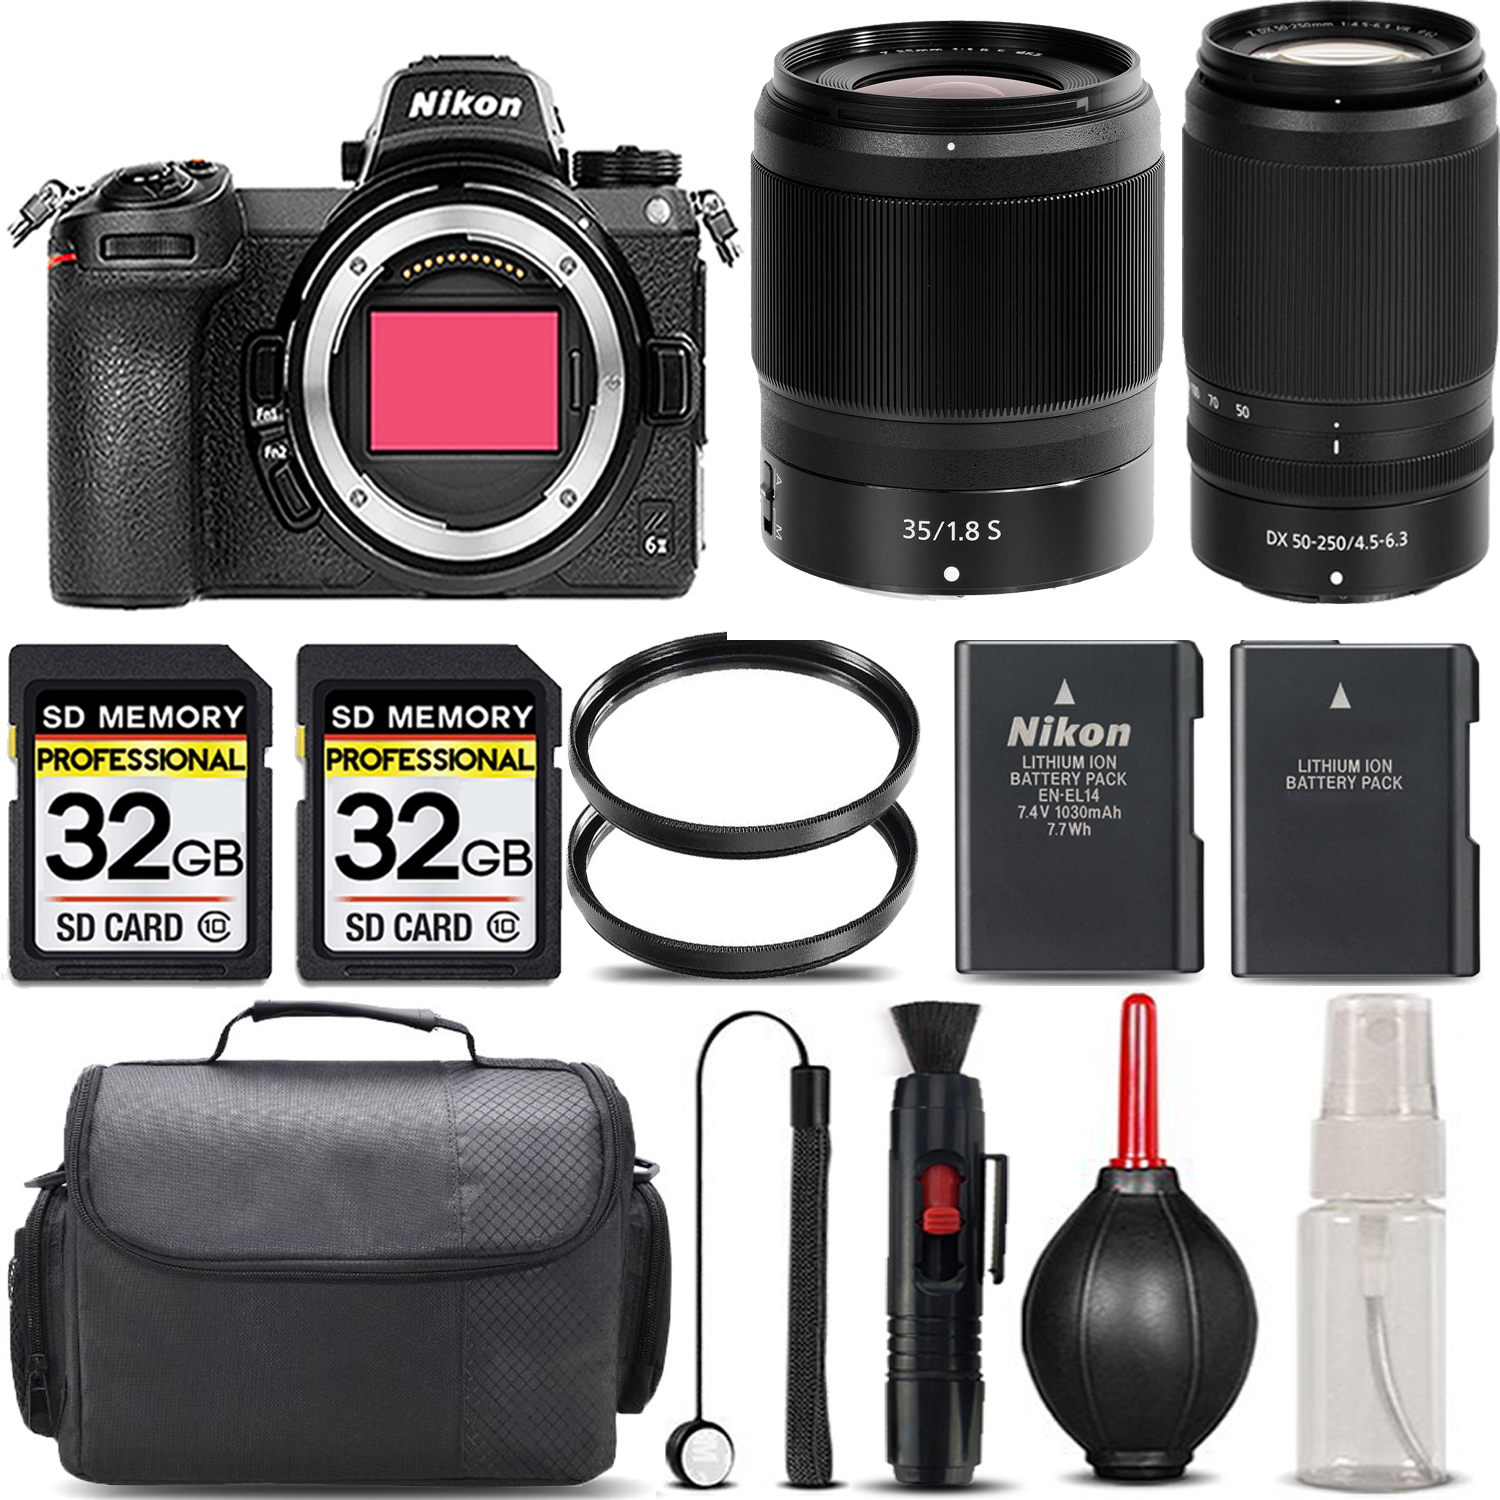 Z6 II + 50-250mm f/4.5-6.3 Lens + 35mm f/1.8 S Lens + Handbag - SAVE BIG KIT *FREE SHIPPING*